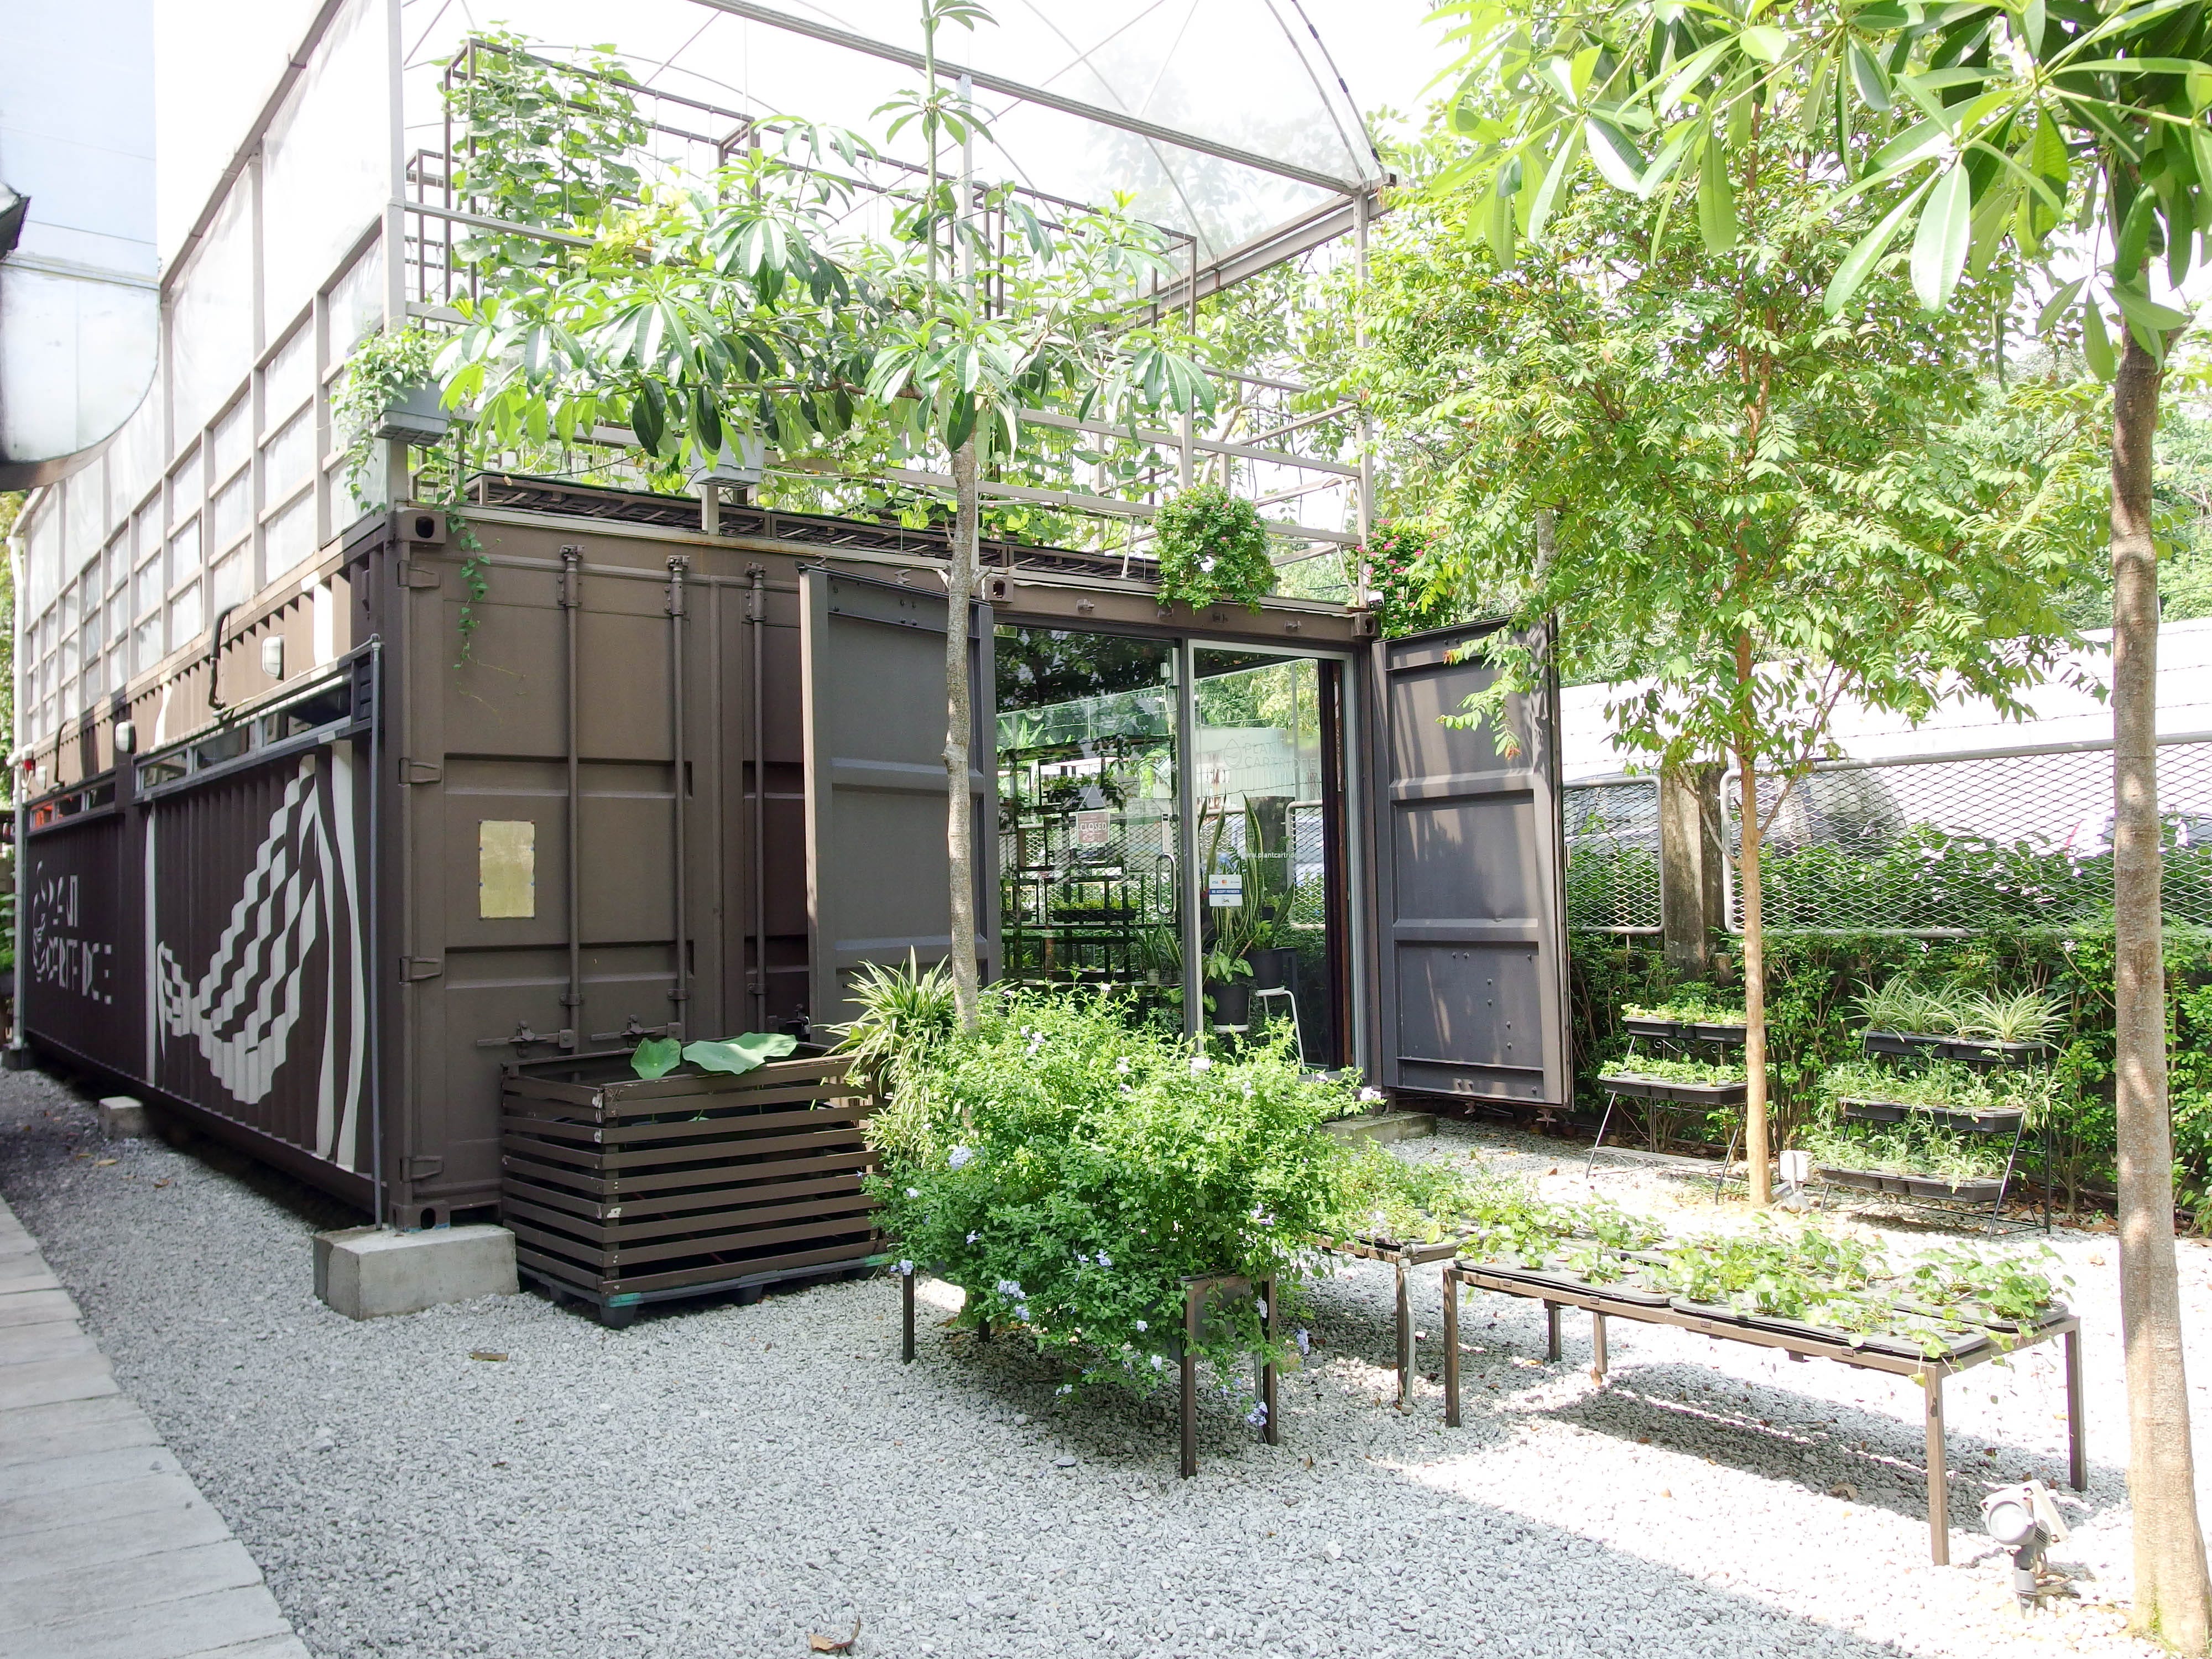 Urban farming laboratory